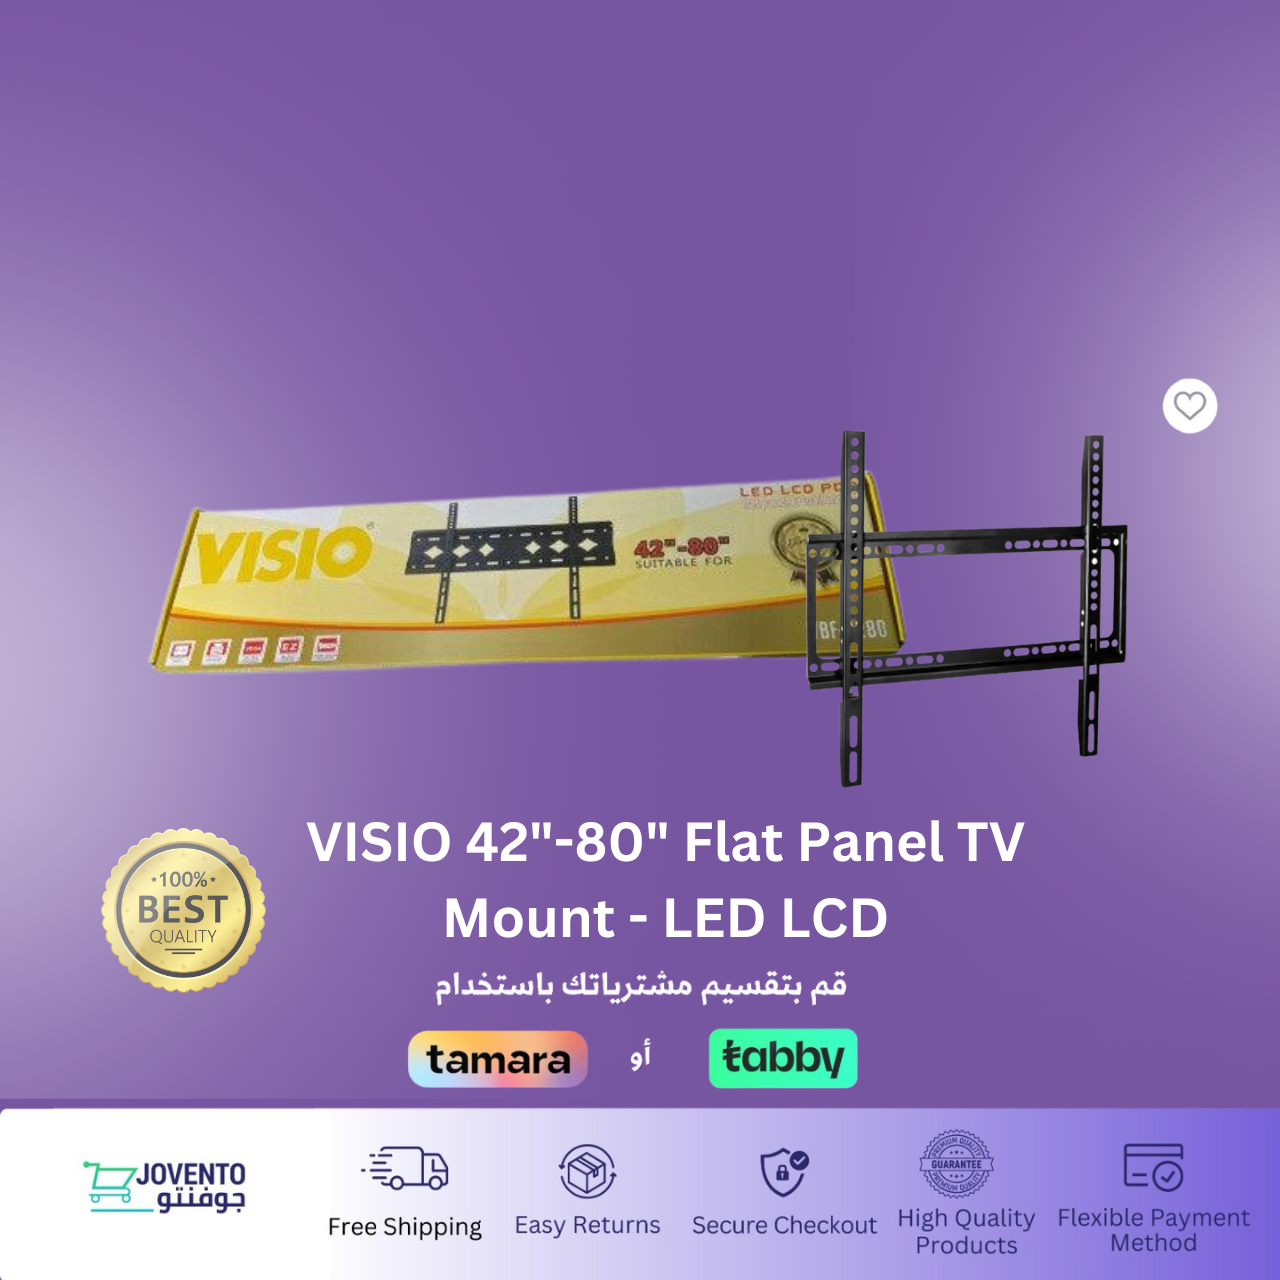 VISIO 42"-80" Flat Panel TV Mount - LED LCD